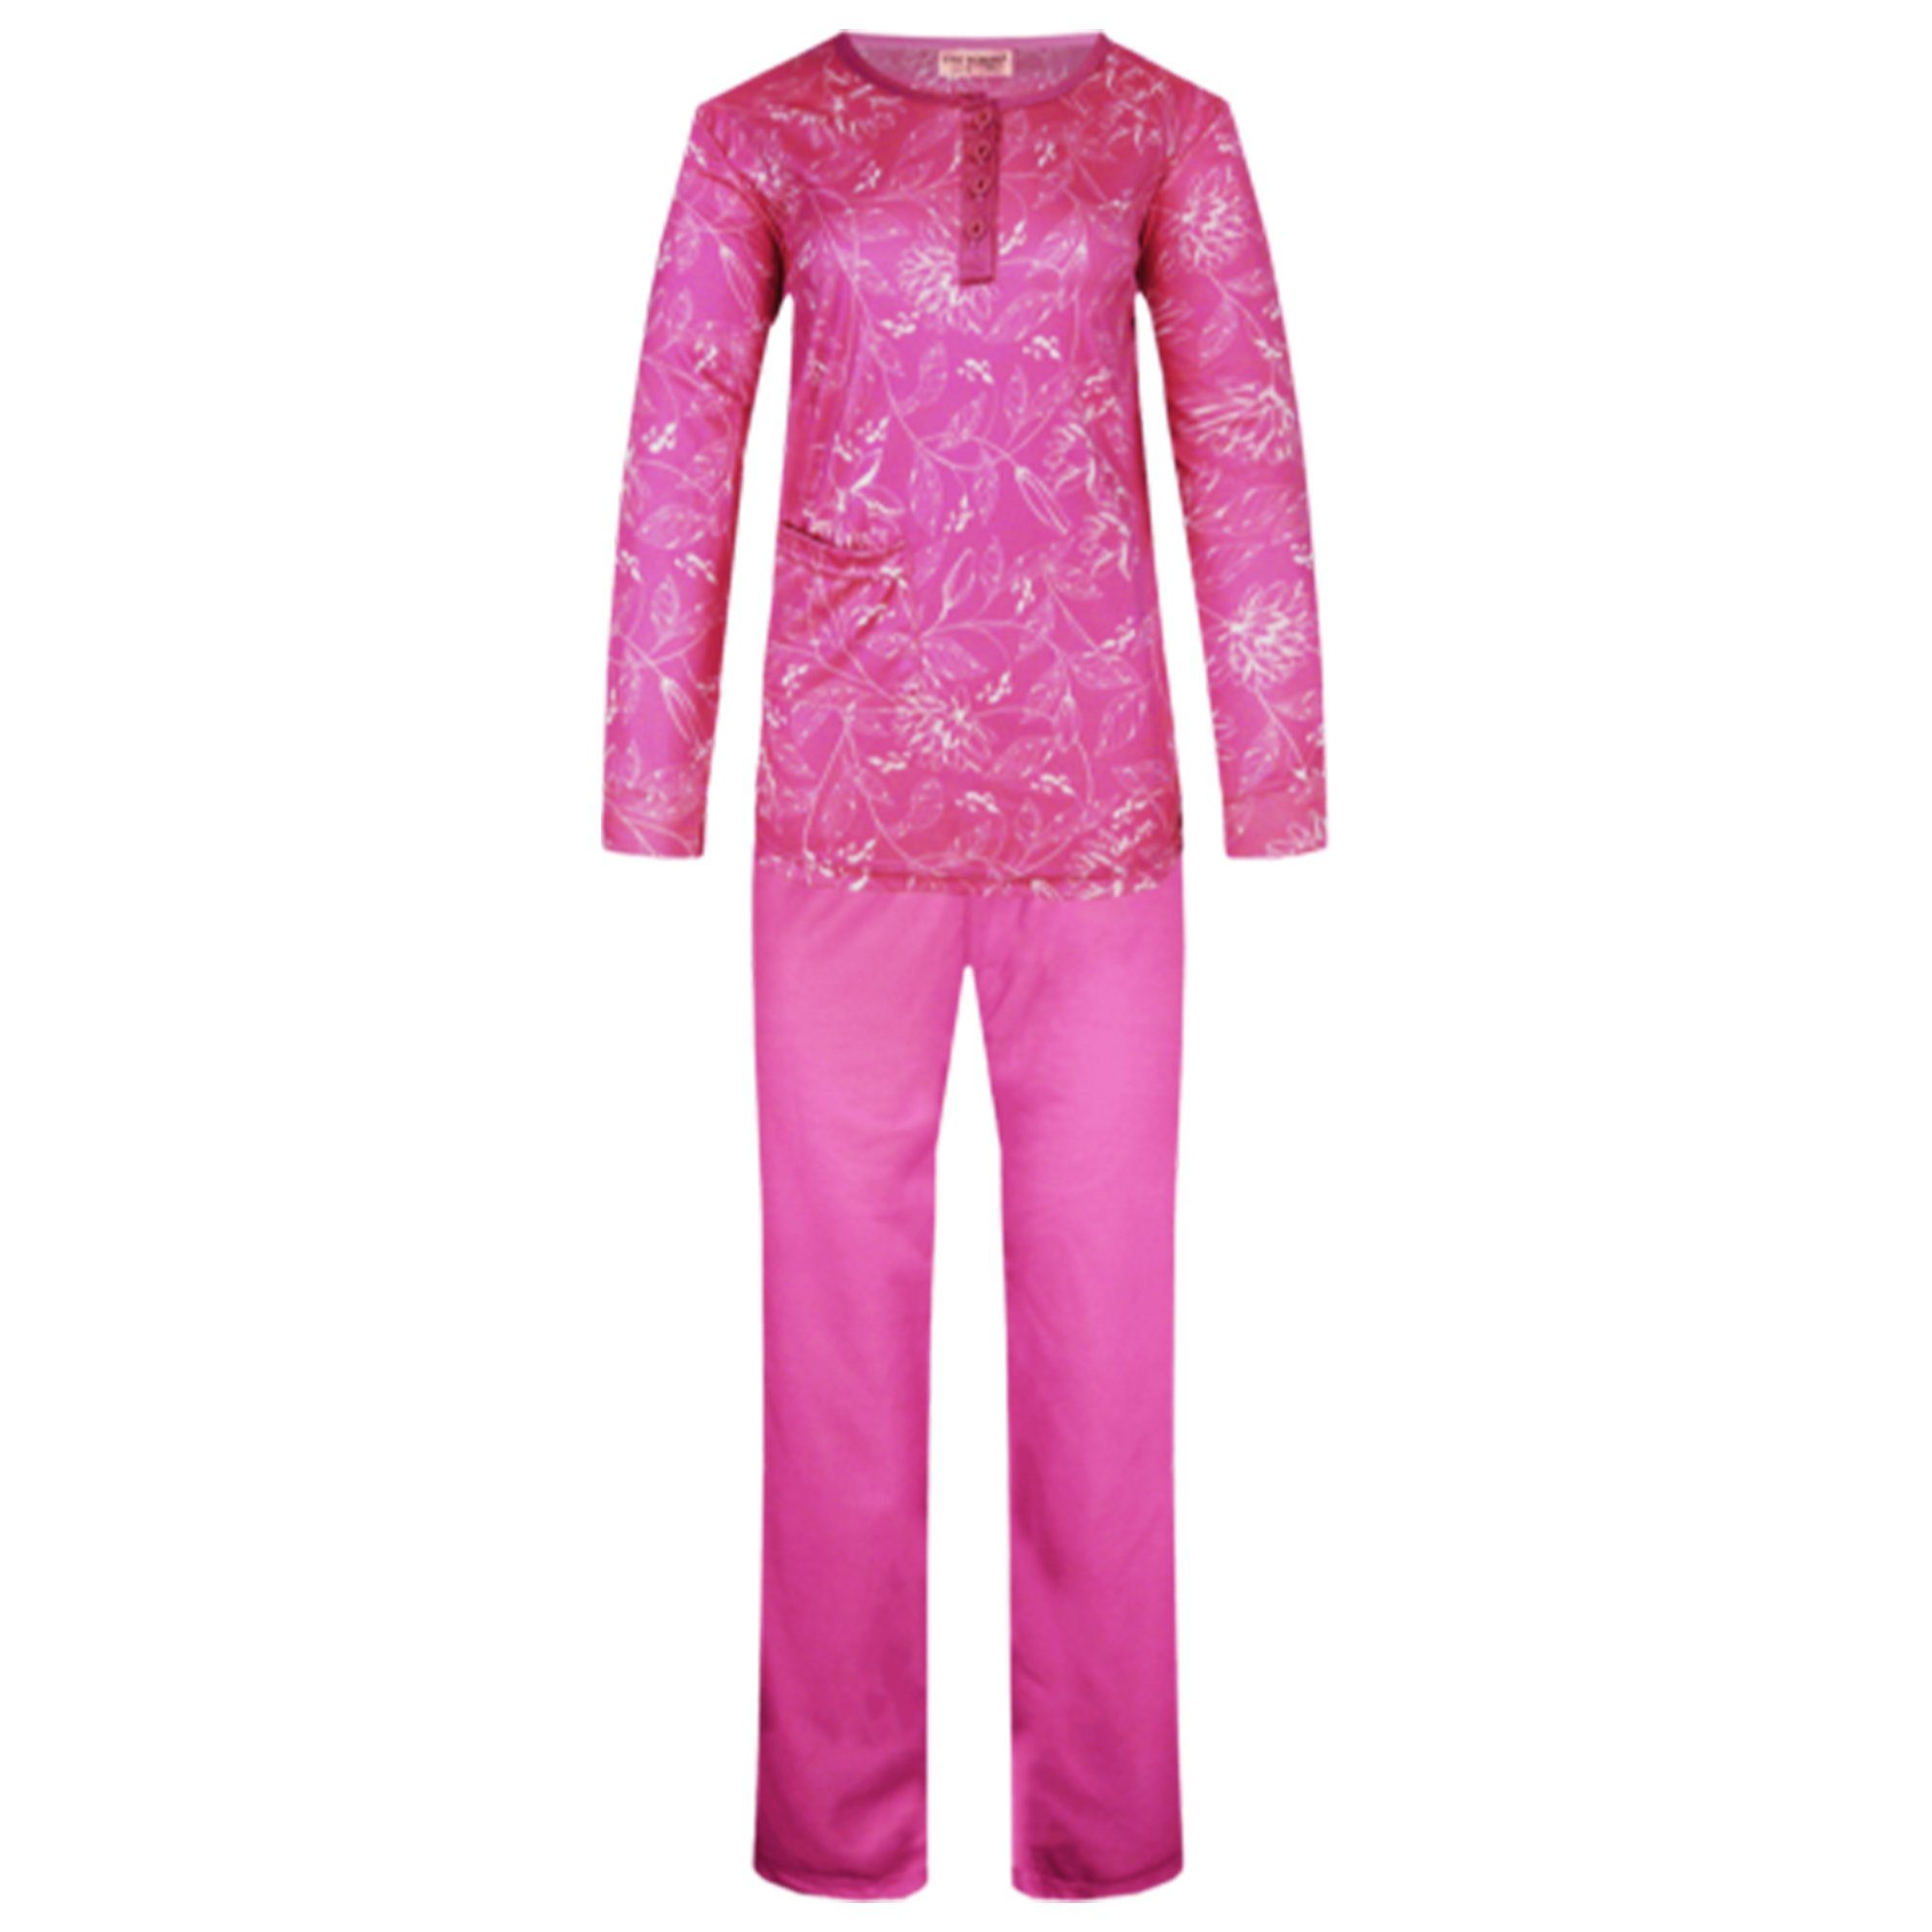 TEXEMP Pyjama Damen Pyjama Schlafanzug Set Baumwolle Langarm Nachtwäsche Lang (Set) 90% Baumwolle Rot